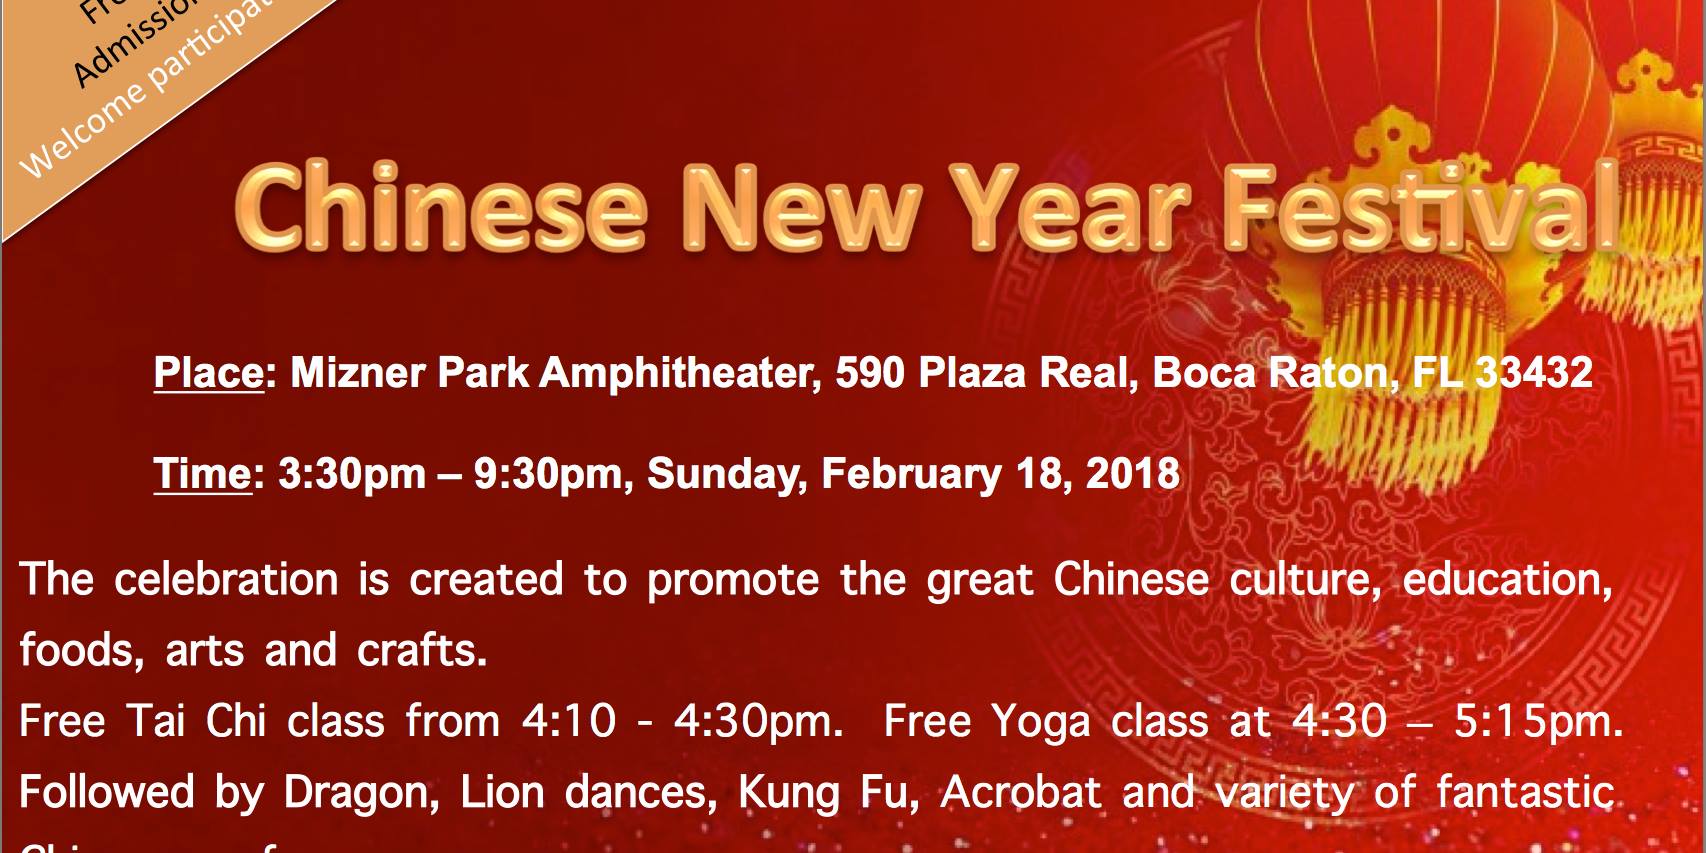 2018 Chinese New Year Festival at Boca Raton, Florida